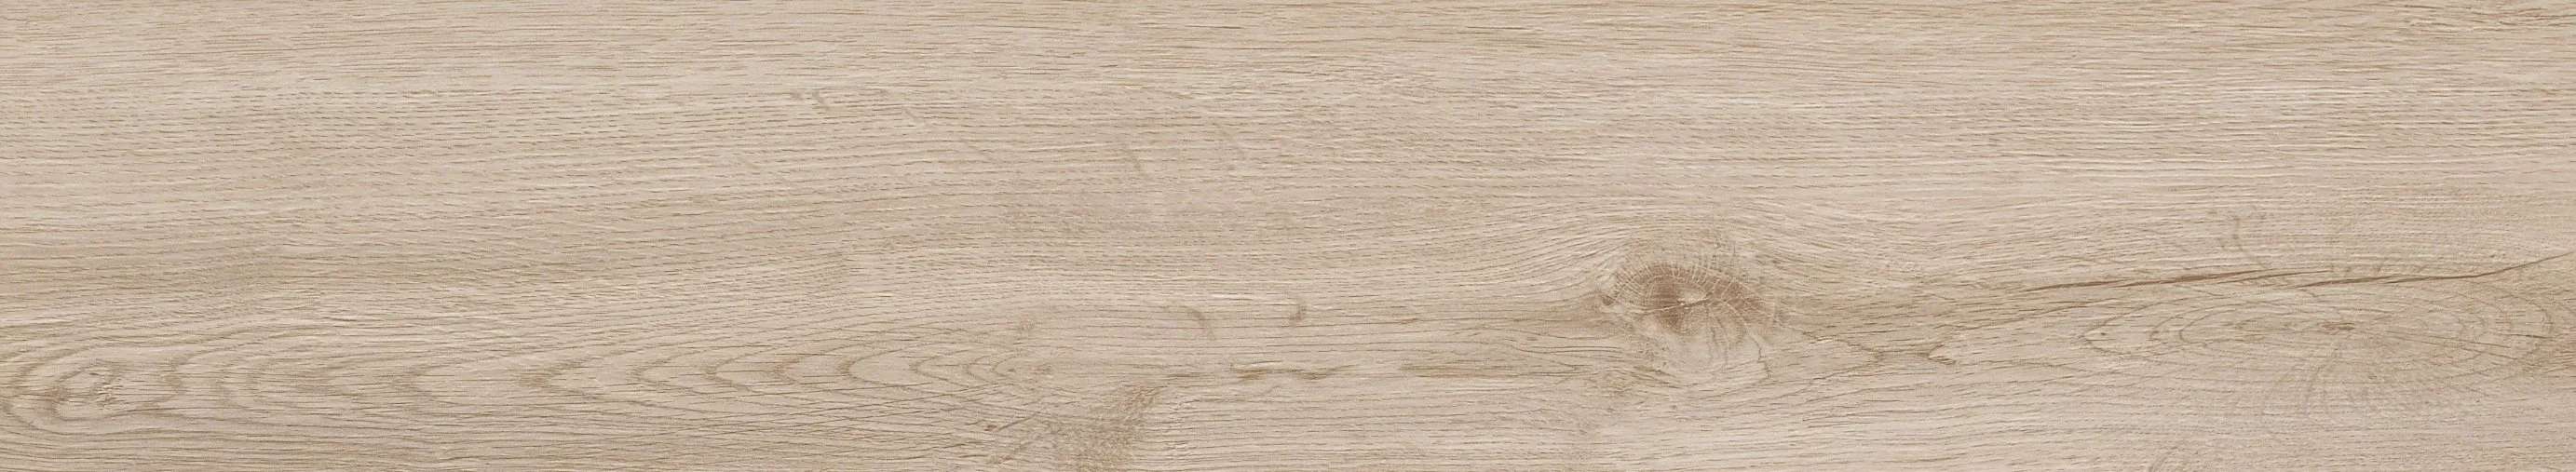 Frost-Resistance 150*800mm madera natural de color gris Baldosa Cerámica copia